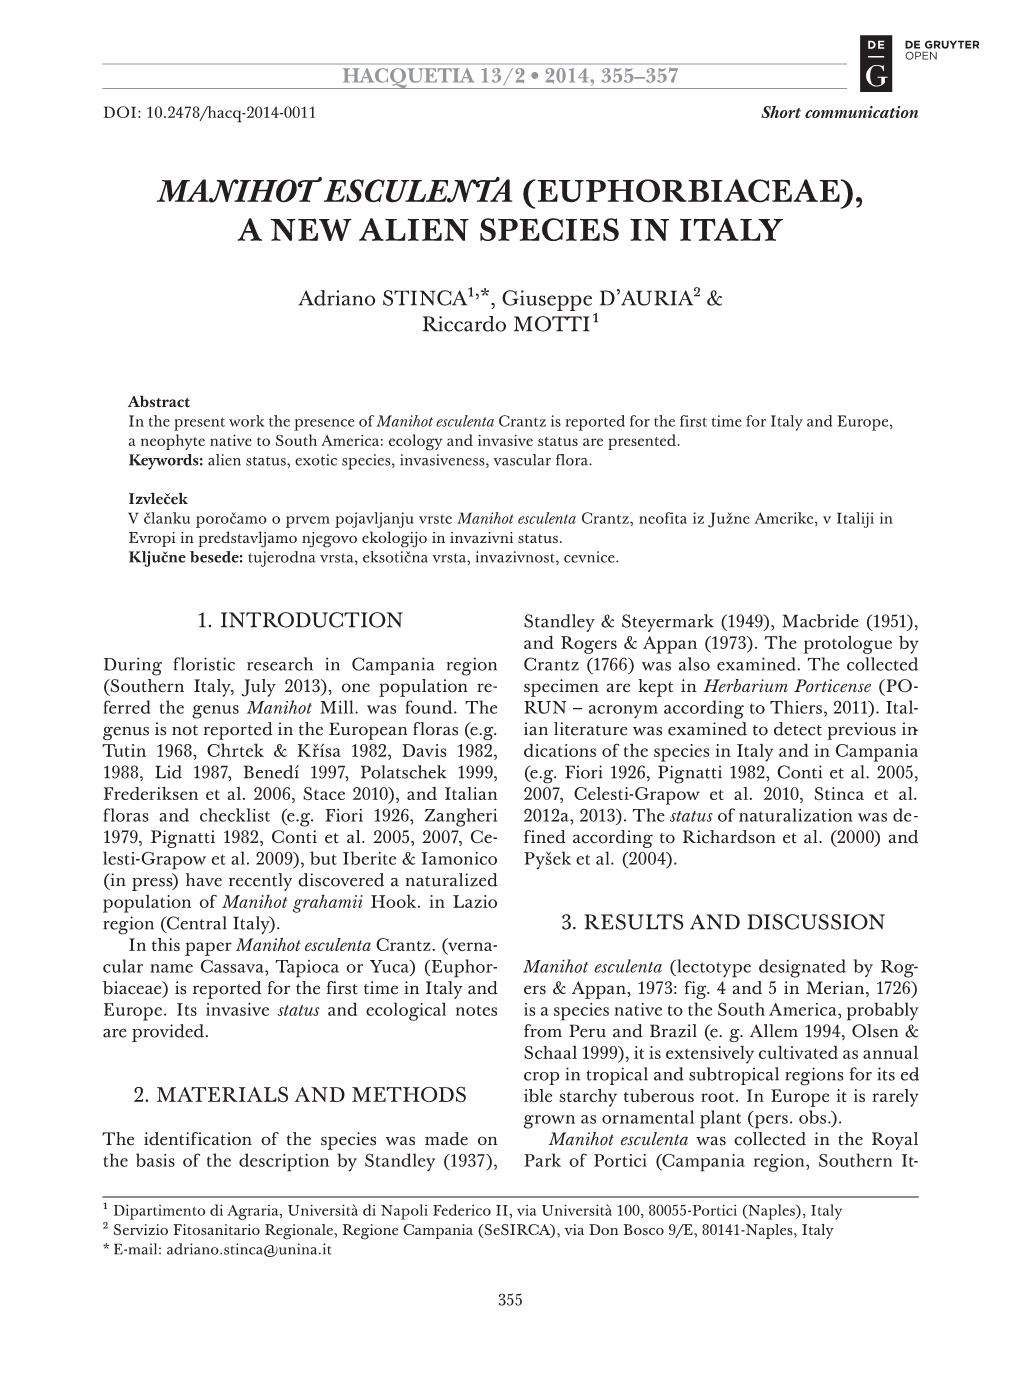 Manihot Esculenta (Euphorbiaceae), a New Alien Species in Italy